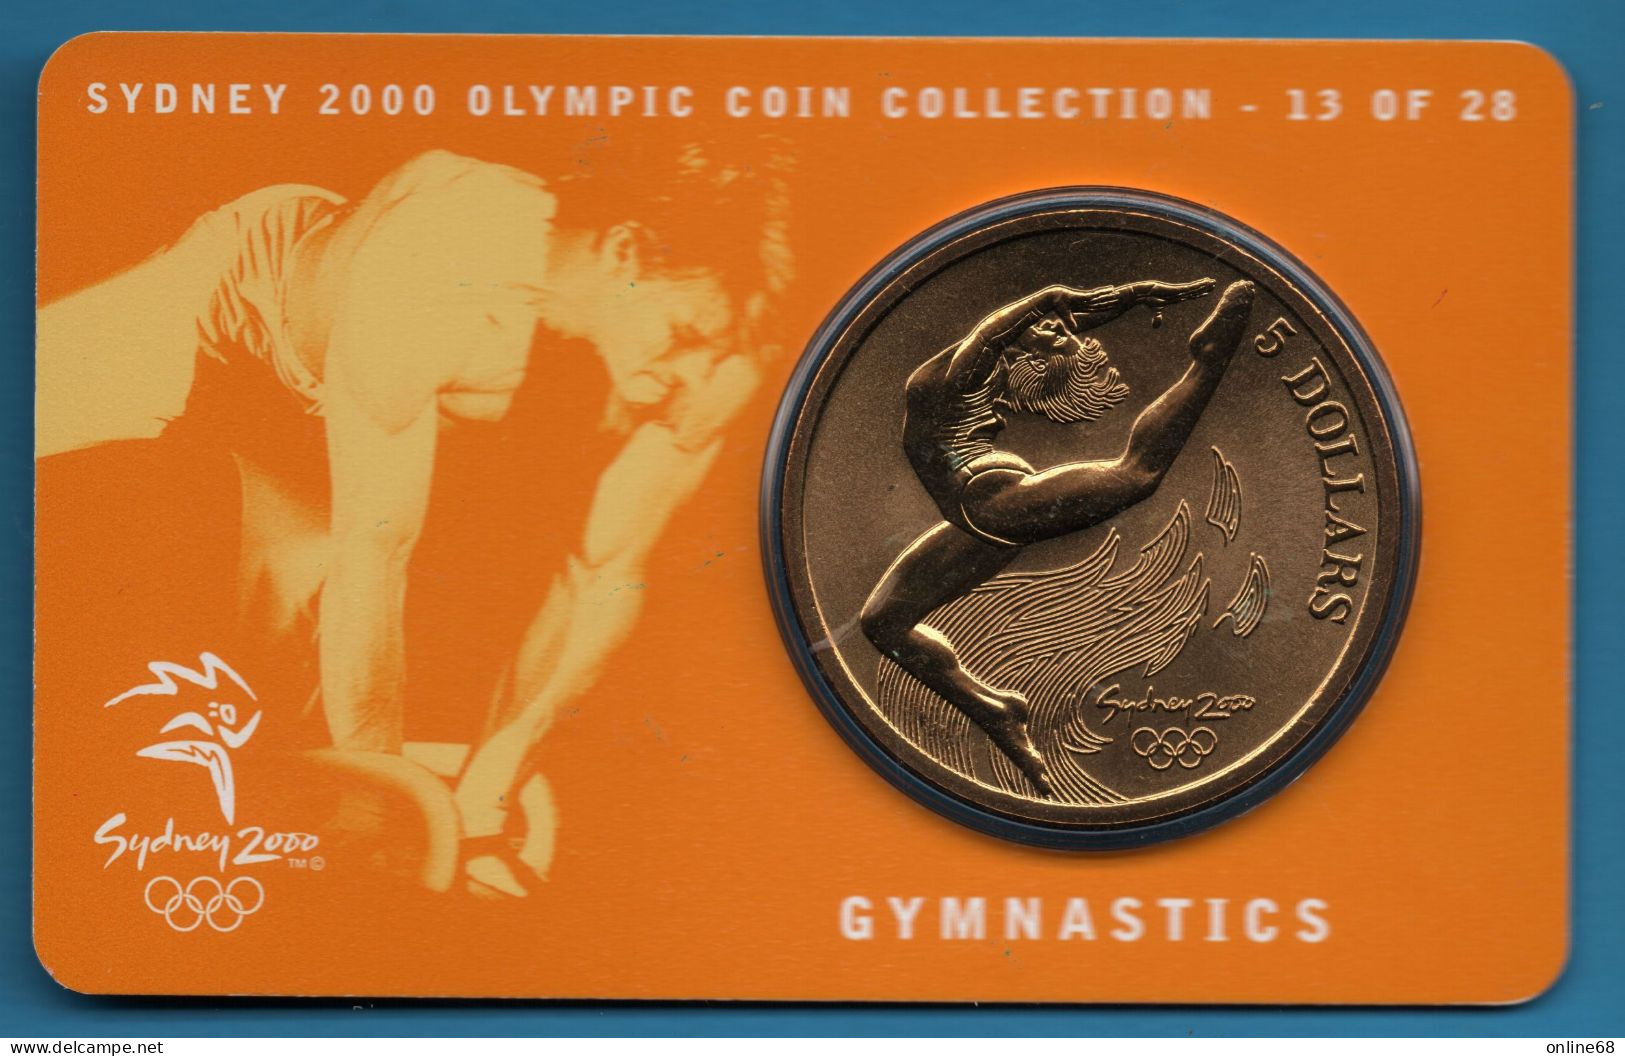 AUSTRALIA 5 DOLLARS 2000 OLYMPIC COIN COLLECTION  SYDNEY 2000 Gymnastics  KM# 357 - 5 Dollars